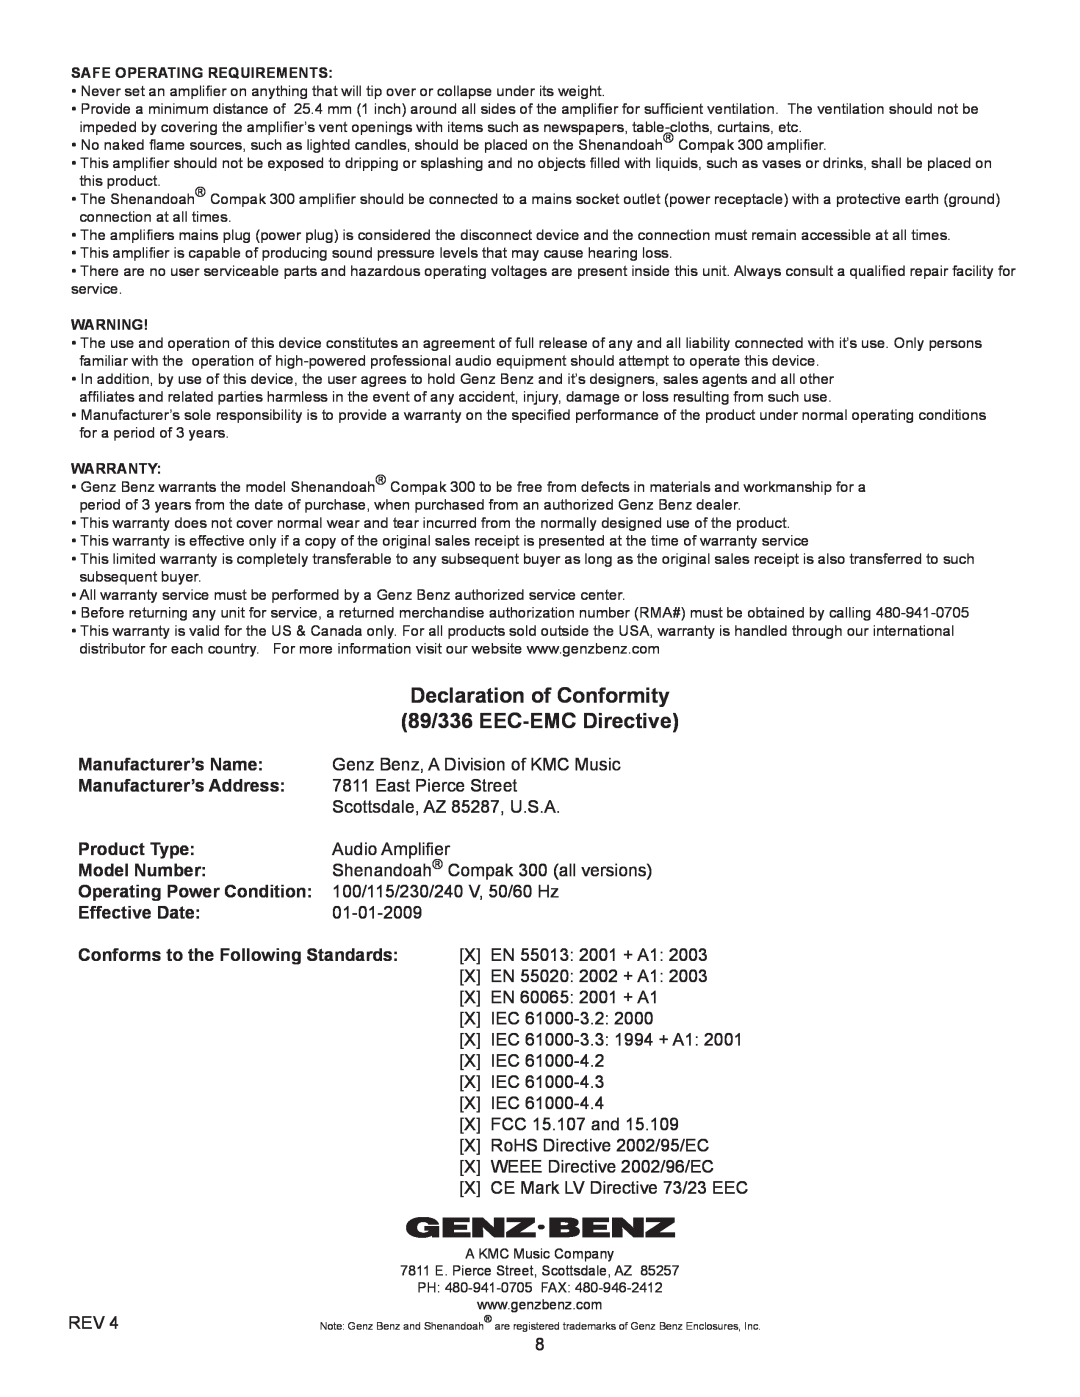 Genz-Benz 300 owner manual Declaration of Conformity 89/336 EEC-EMC Directive, Manufacturer’s Name, Manufacturer’s Address 